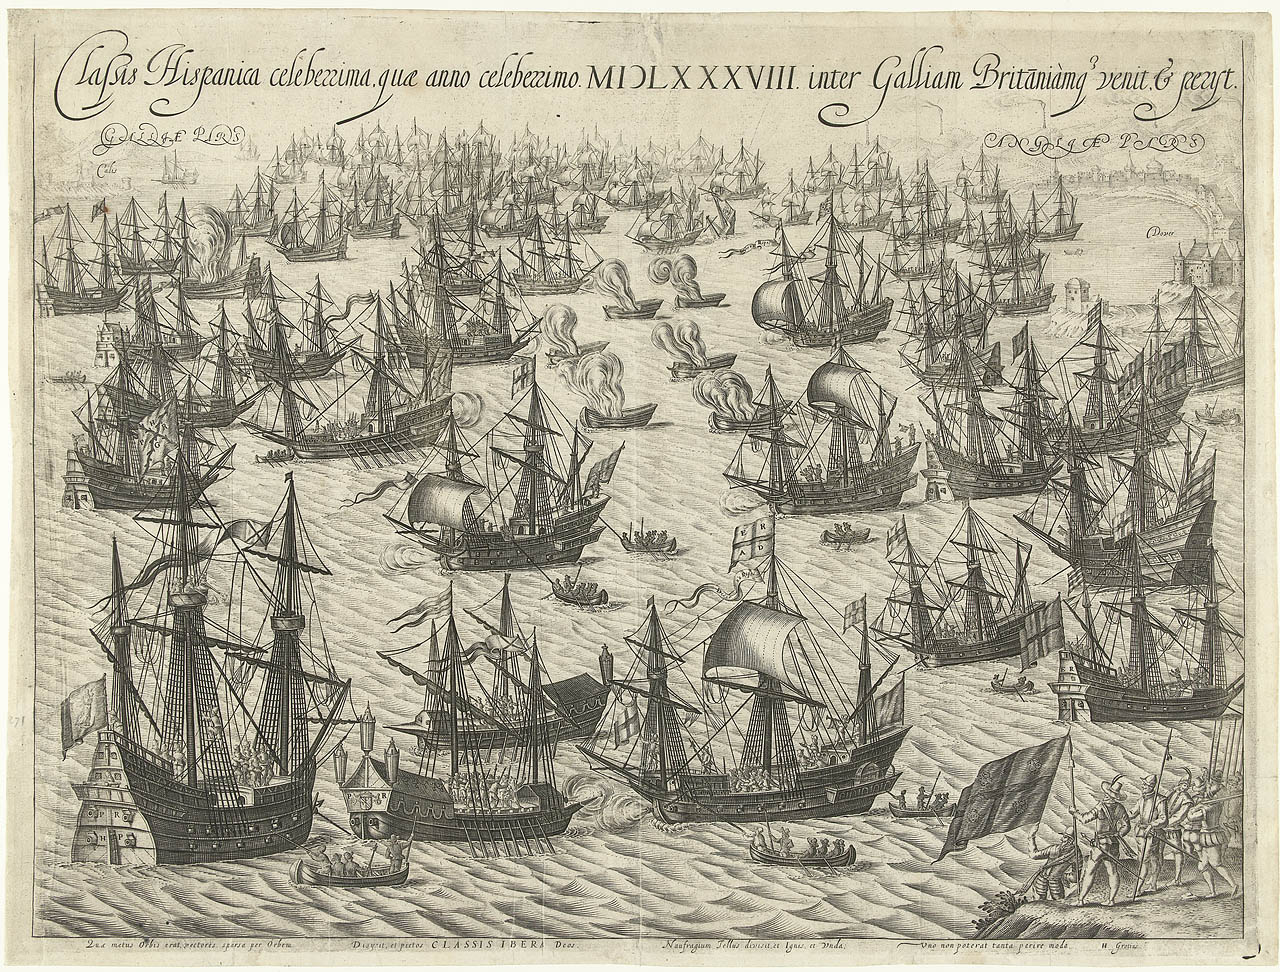 Spanish Armada | Facts, Summary, Invasion Of England, Defeat1280 x 972